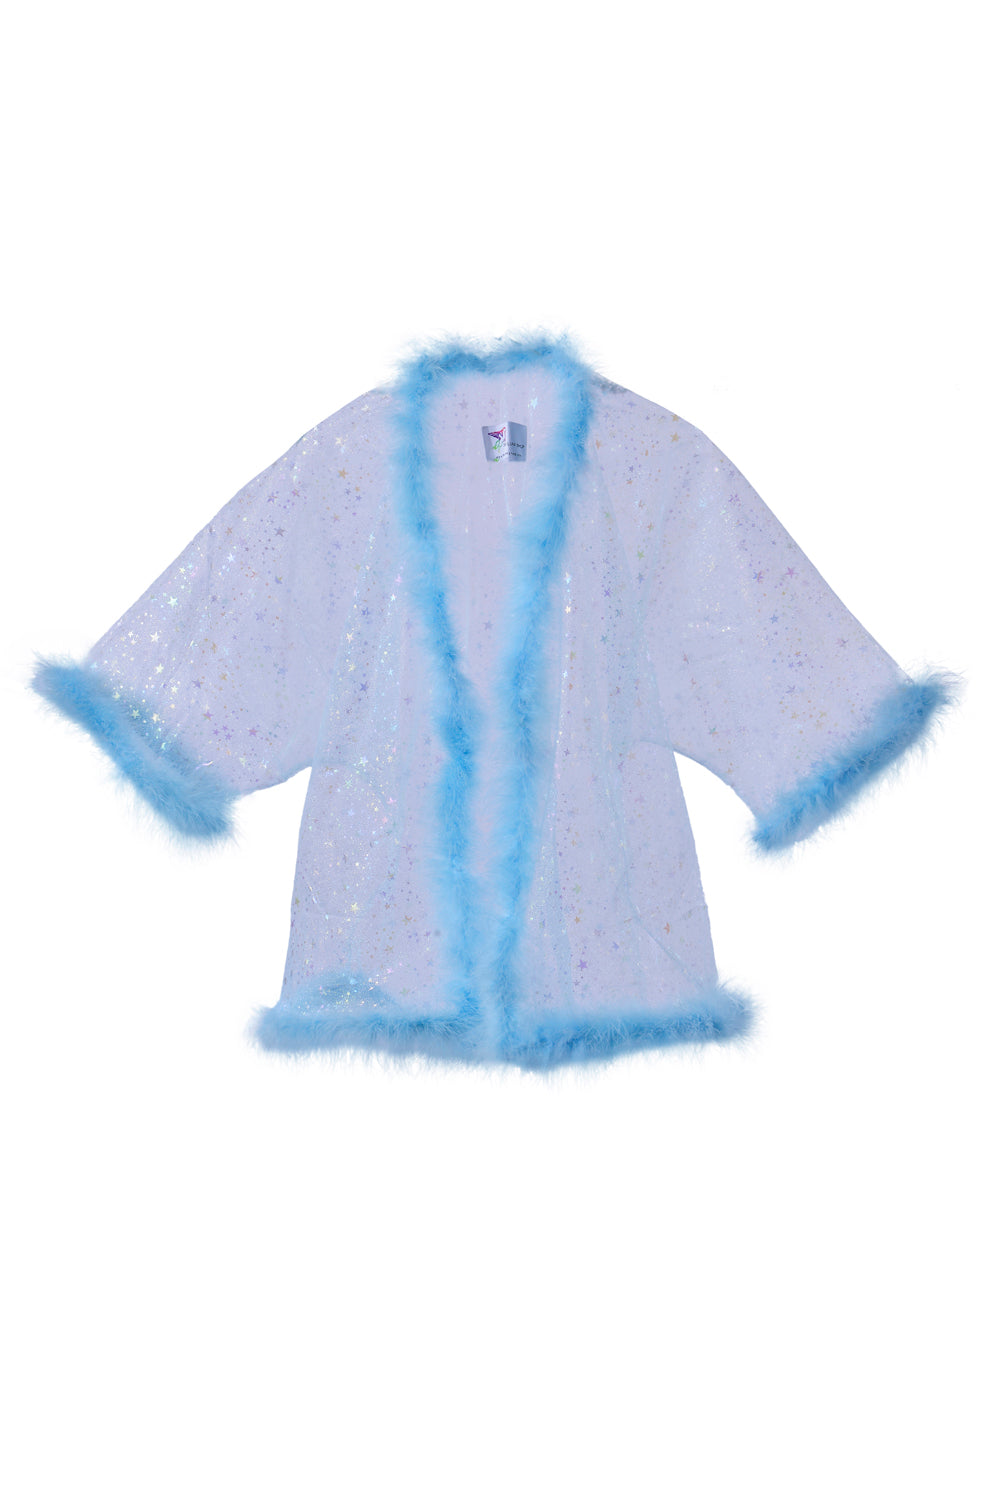 Fuzzy Kimono- Baby Blue Stars